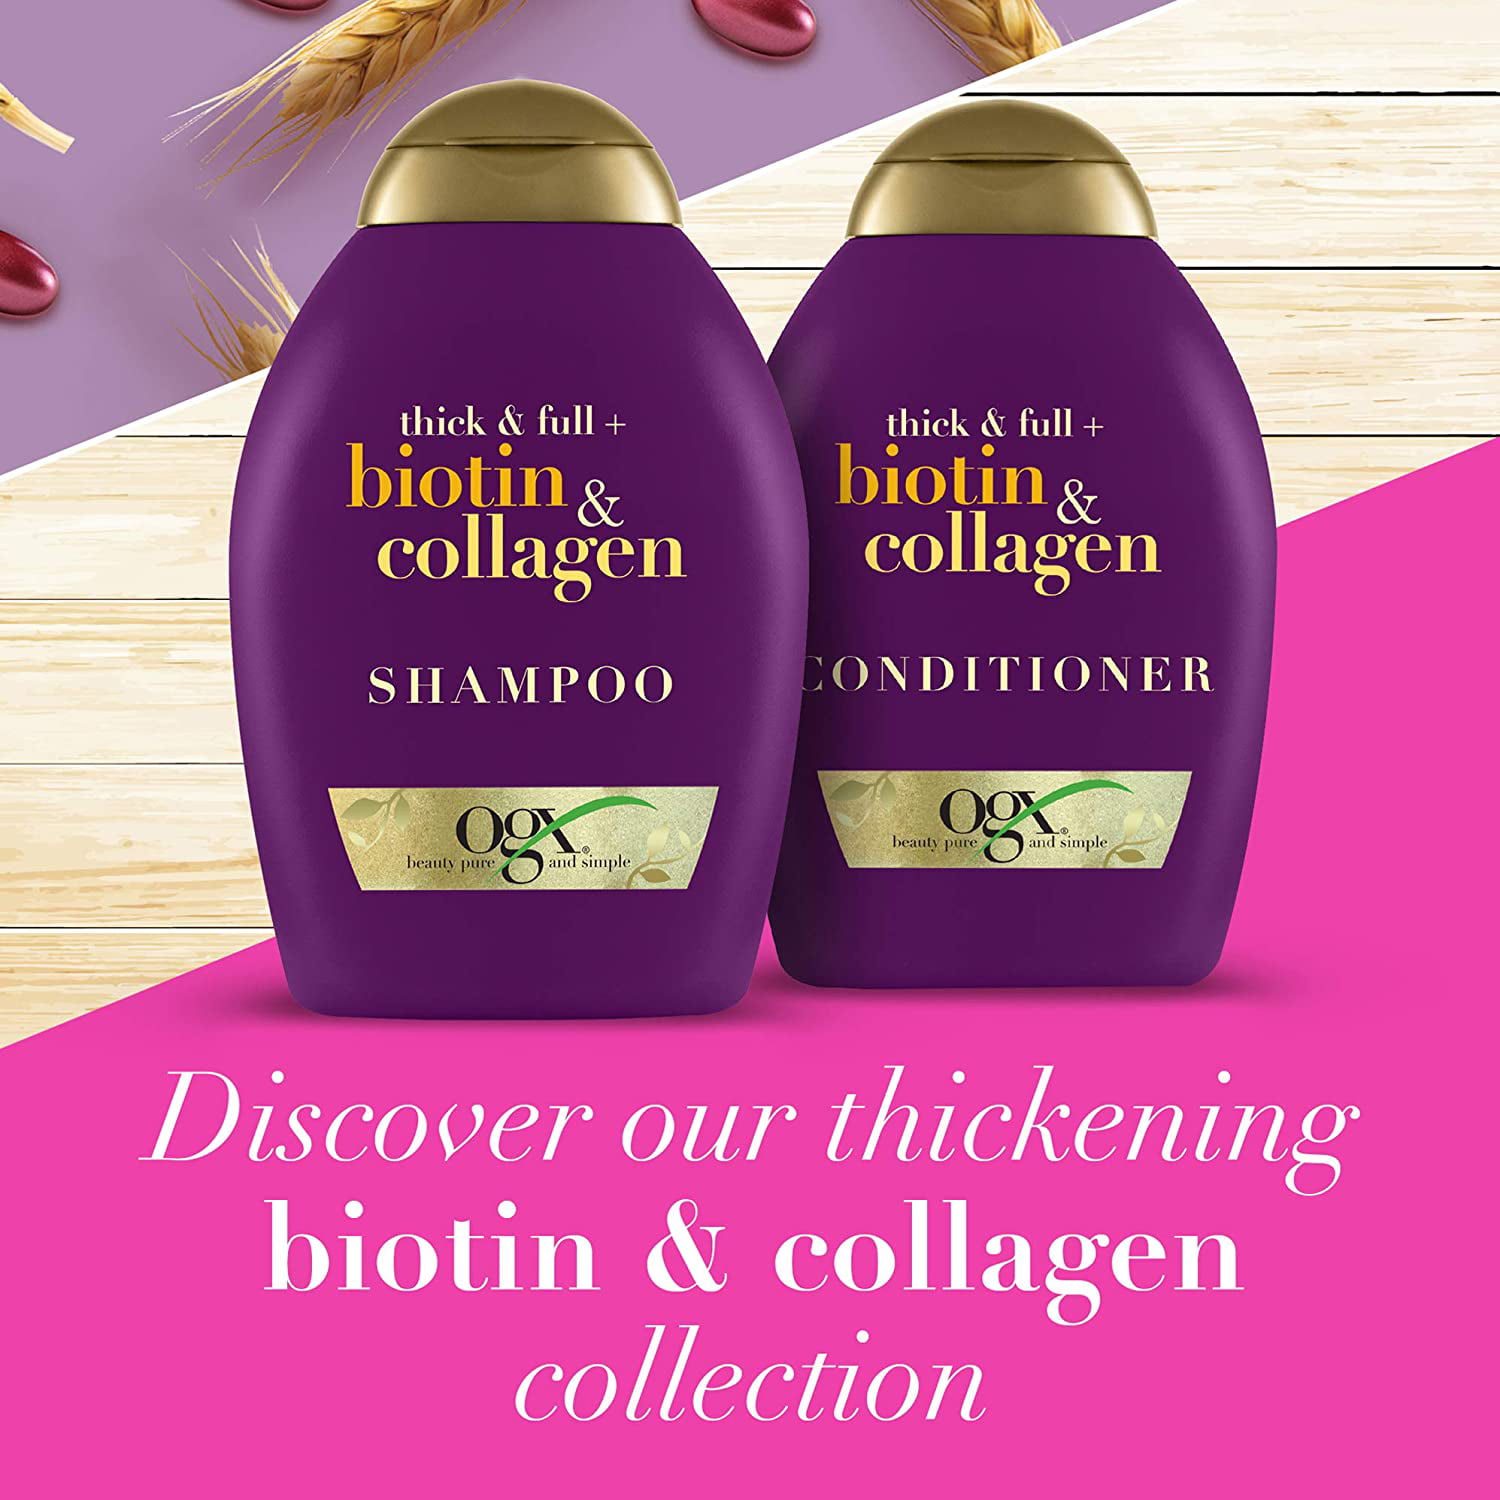 Vær modløs Forstyrret mave OGX Thick & Full + Biotin & Collagen Shampoo & Conditioner Set, 13 Ounce  (packaging may vary), Purple - Walmart.com